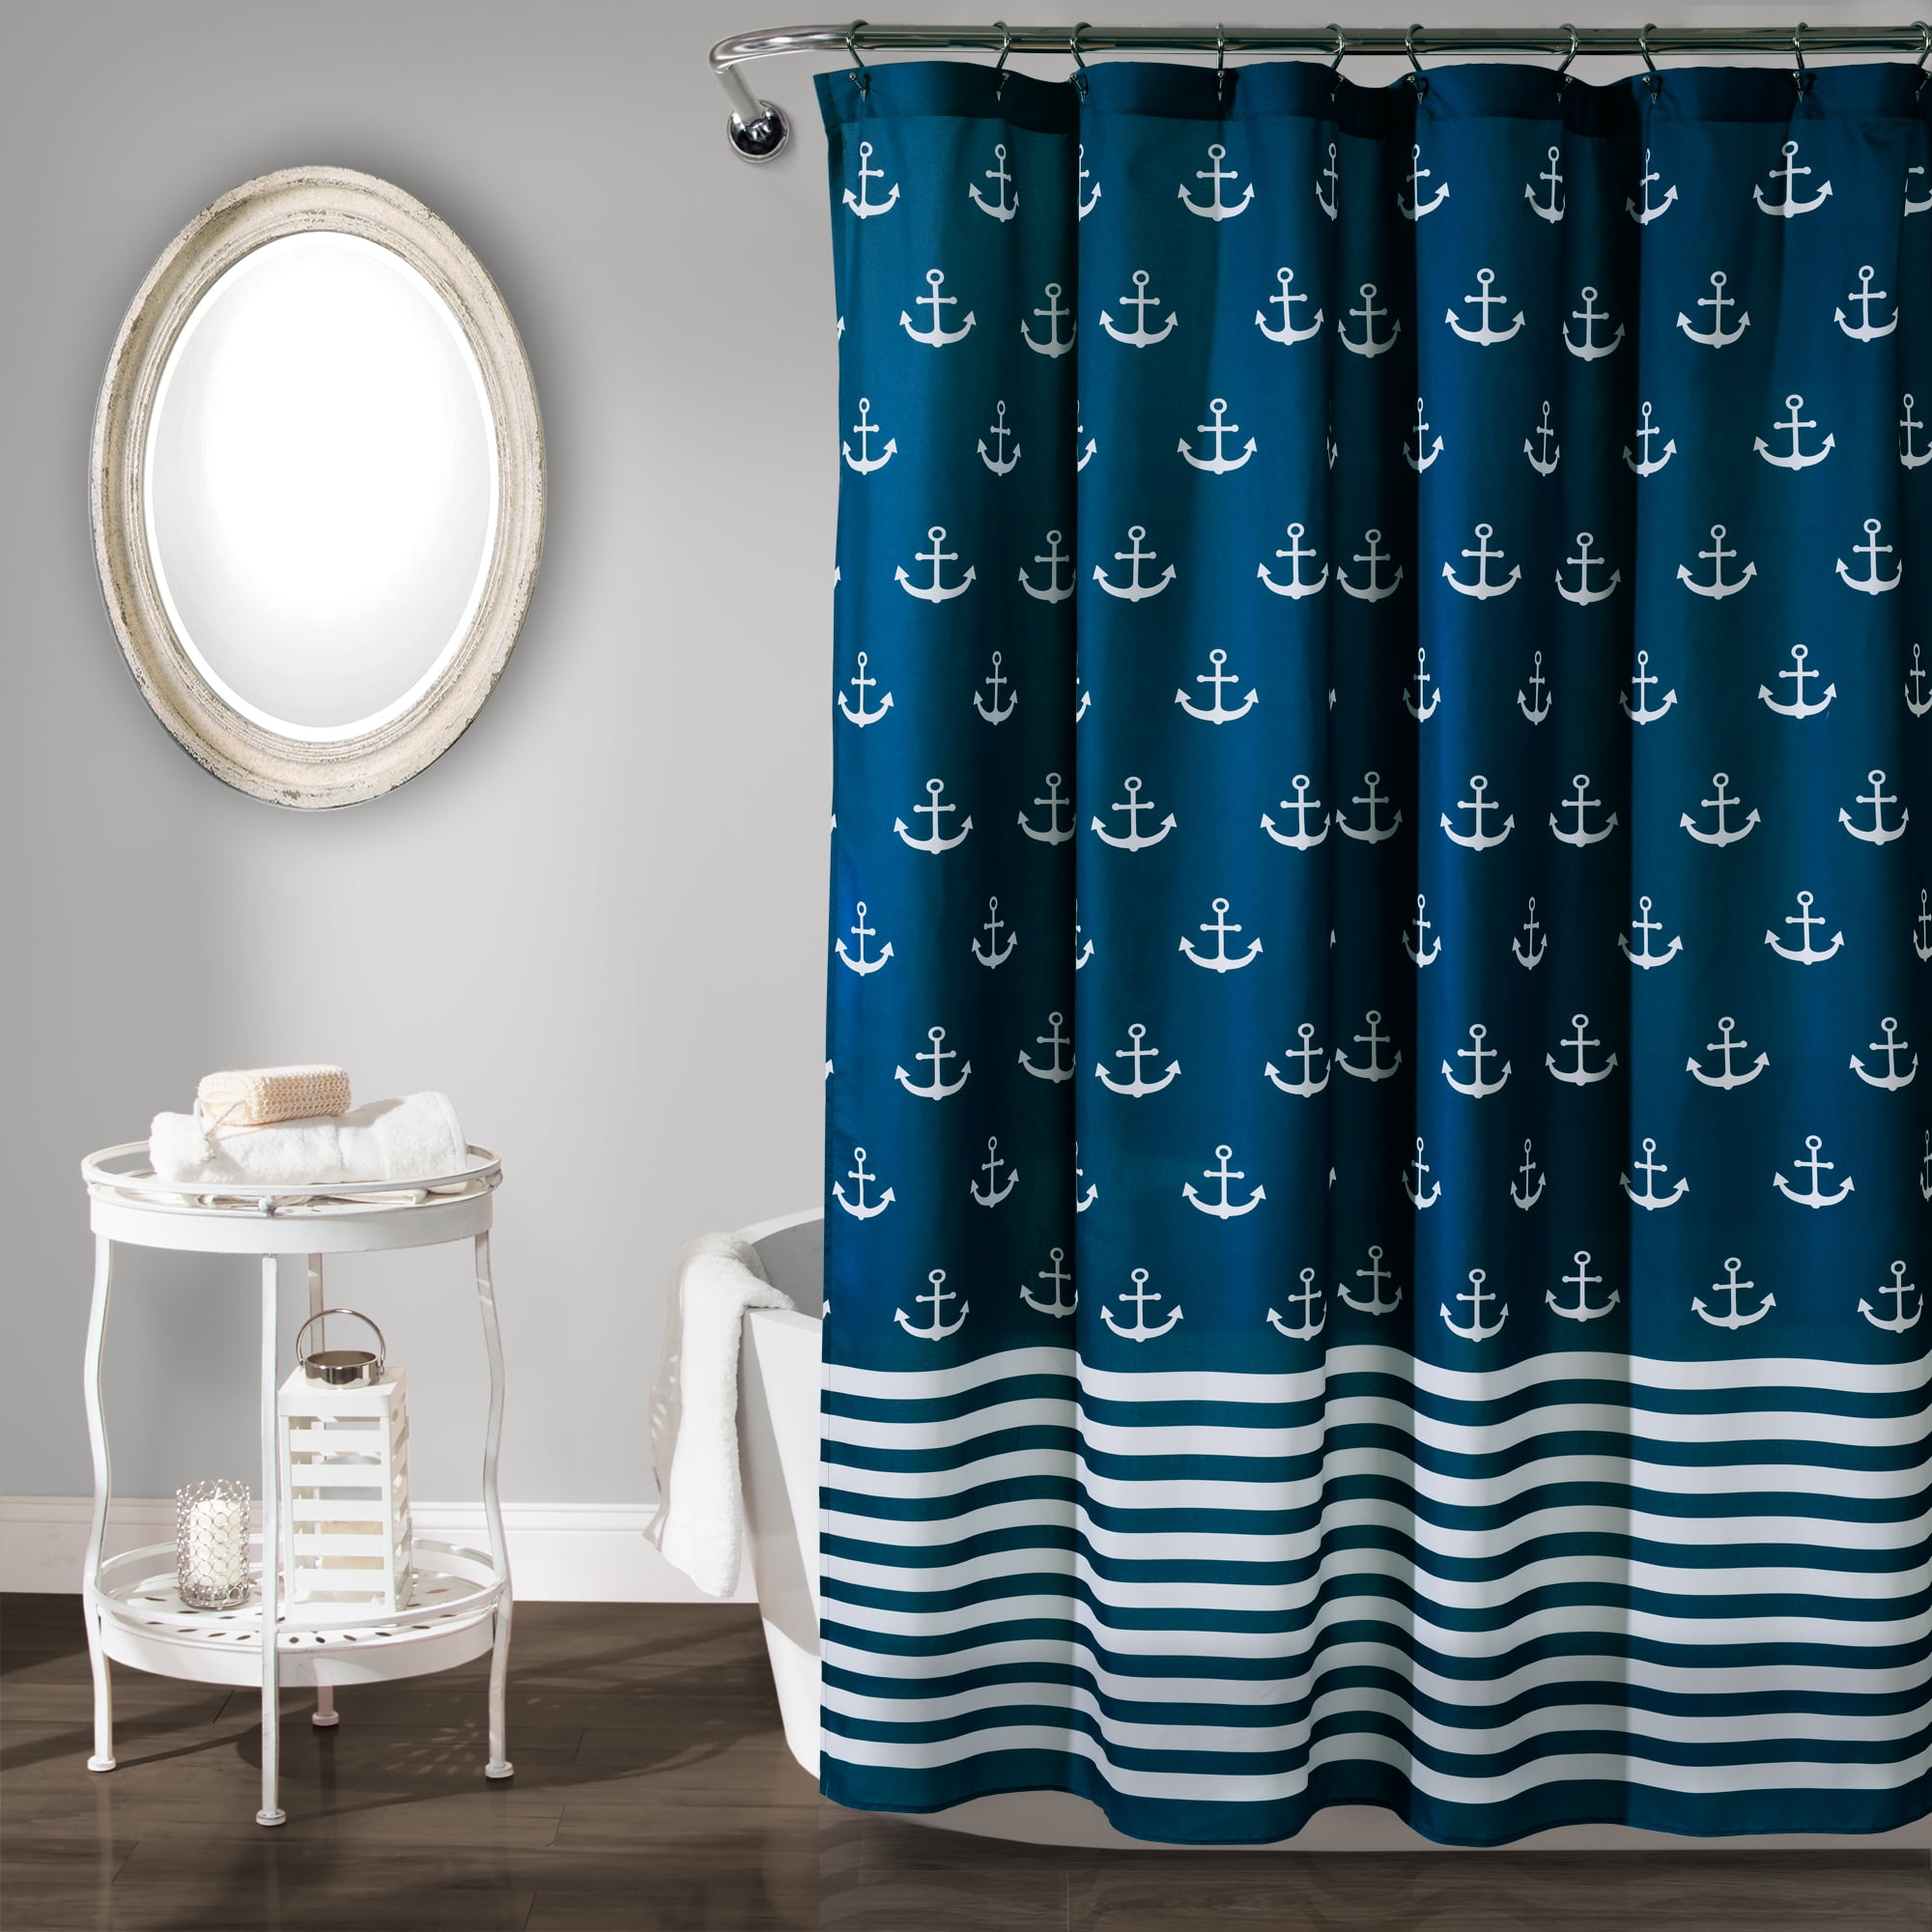 Nautical Ship's Anchor Waterproof Fabric Shower Curtain Bathroom Mat Home Decor 